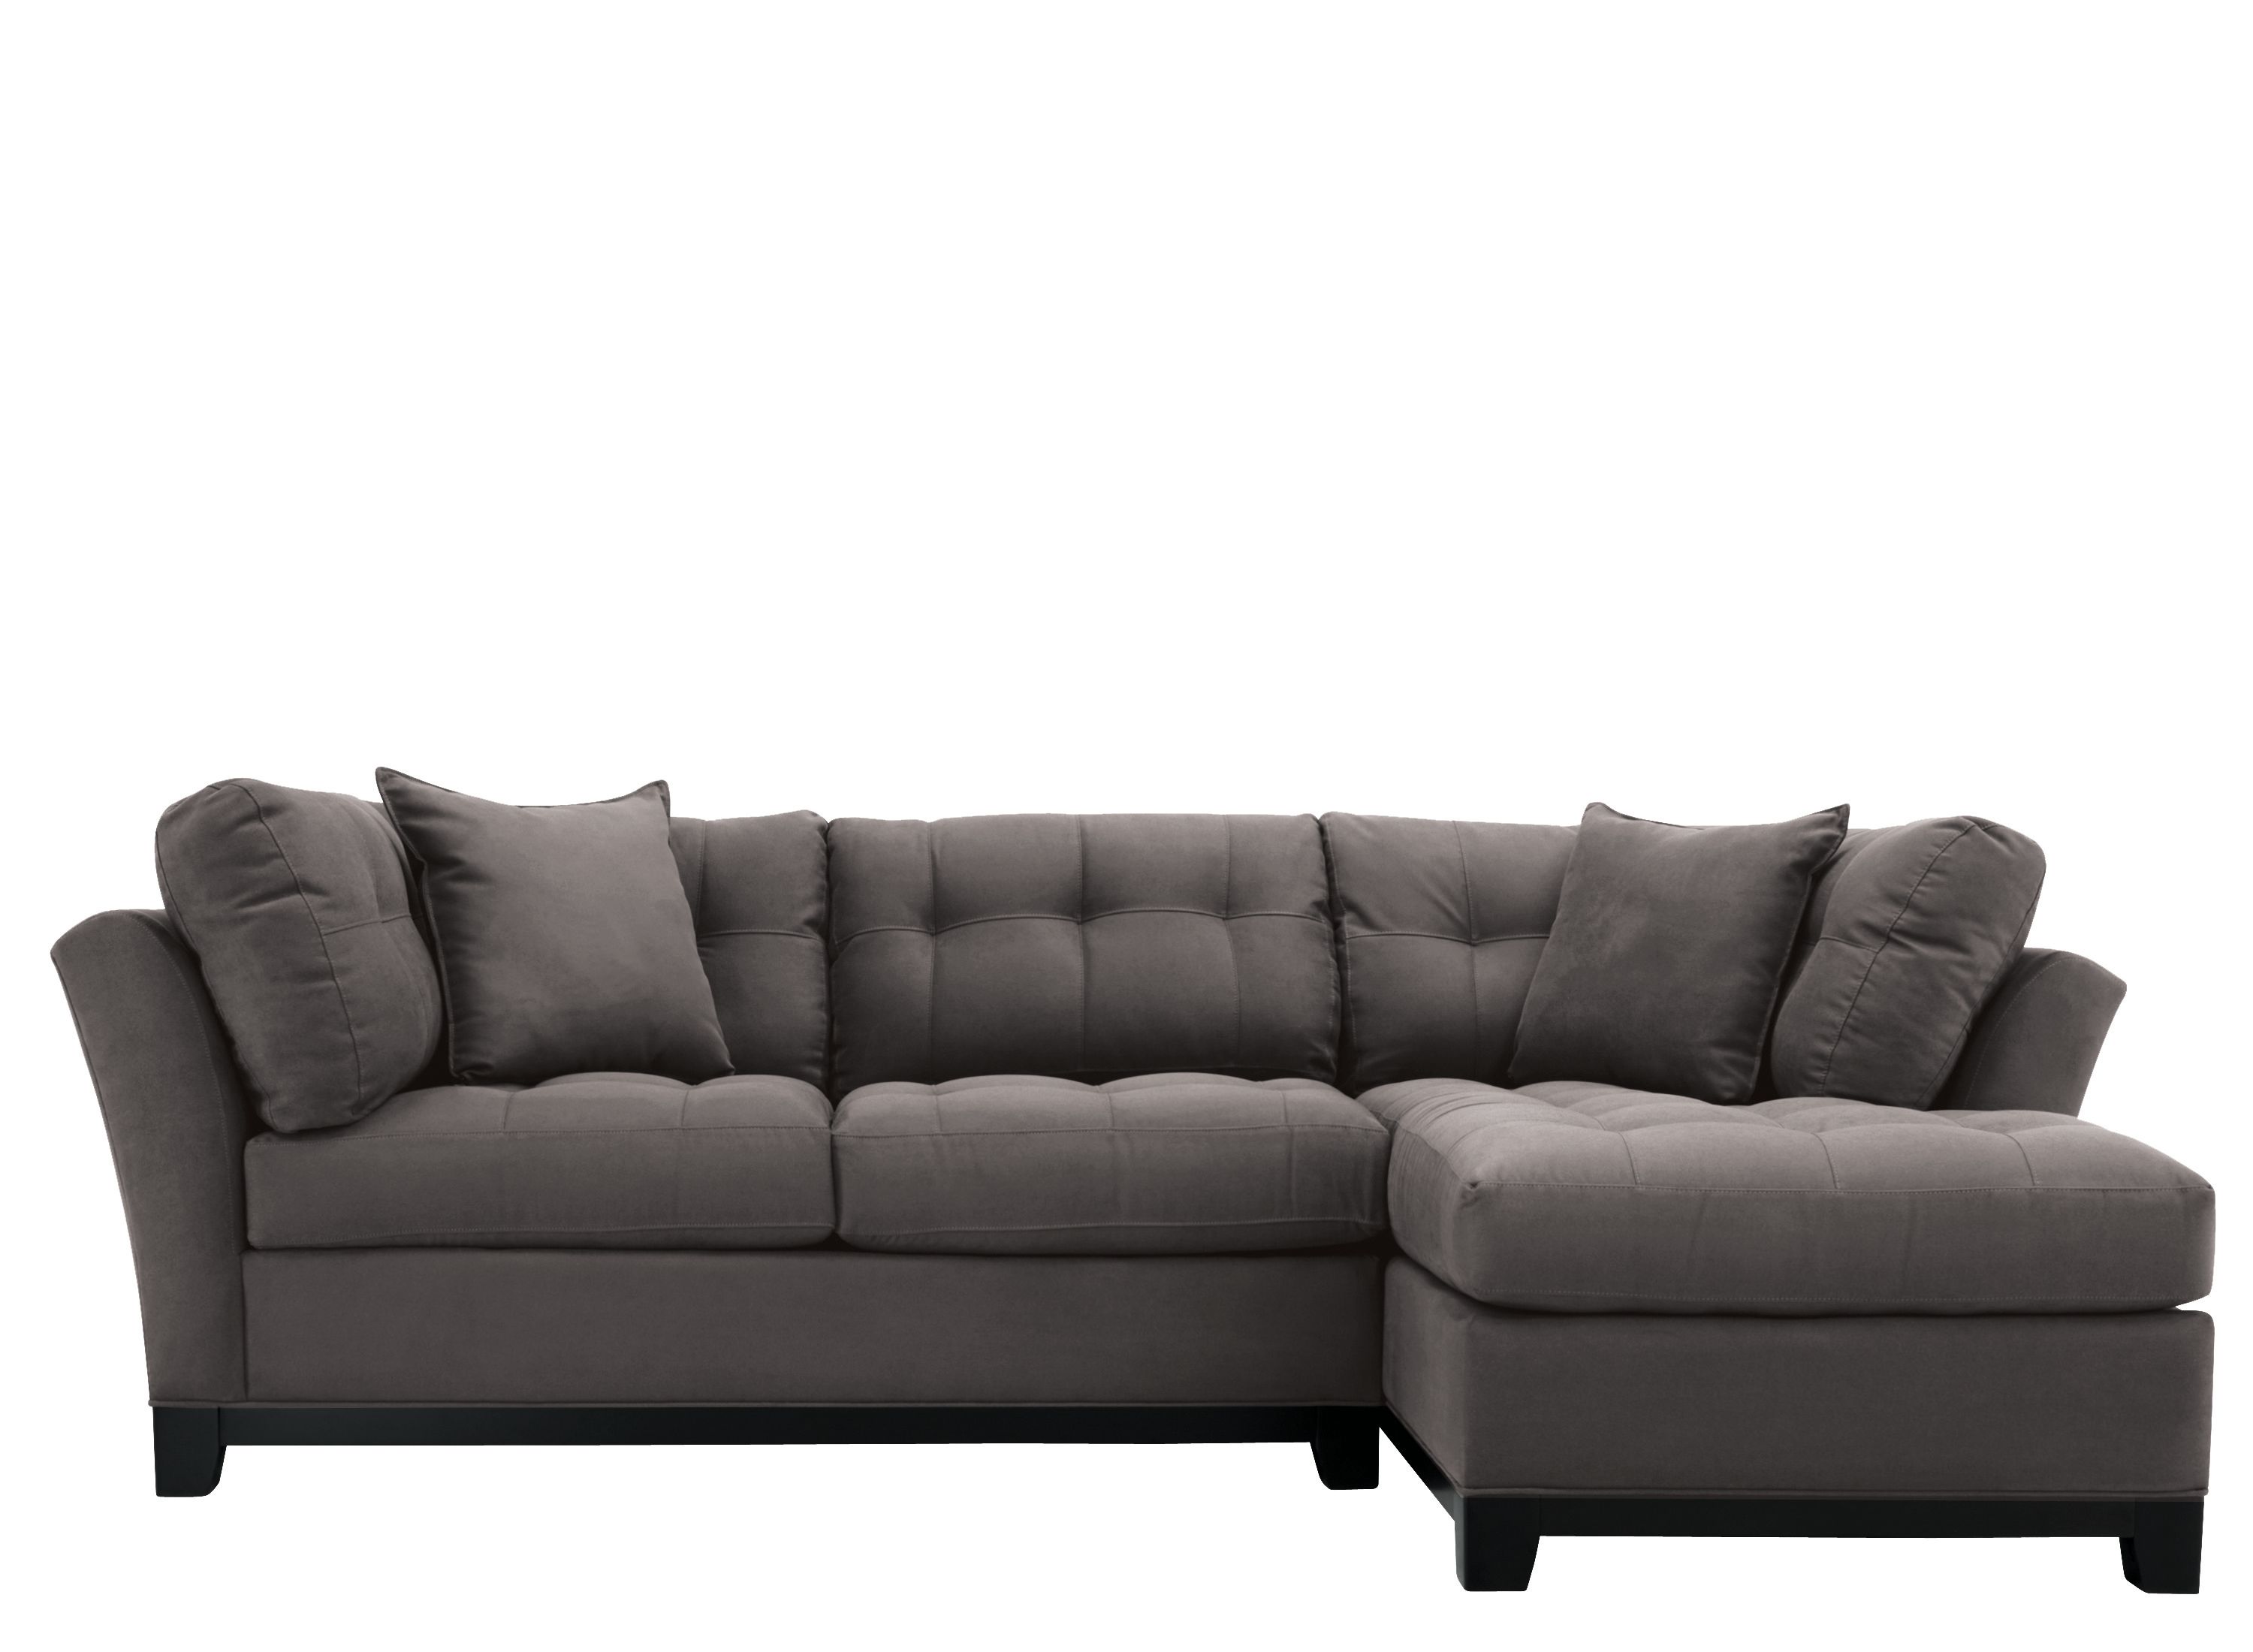 Cindy Crawford Home Metropolis 2 Pc Microfiber Sectional Sofa